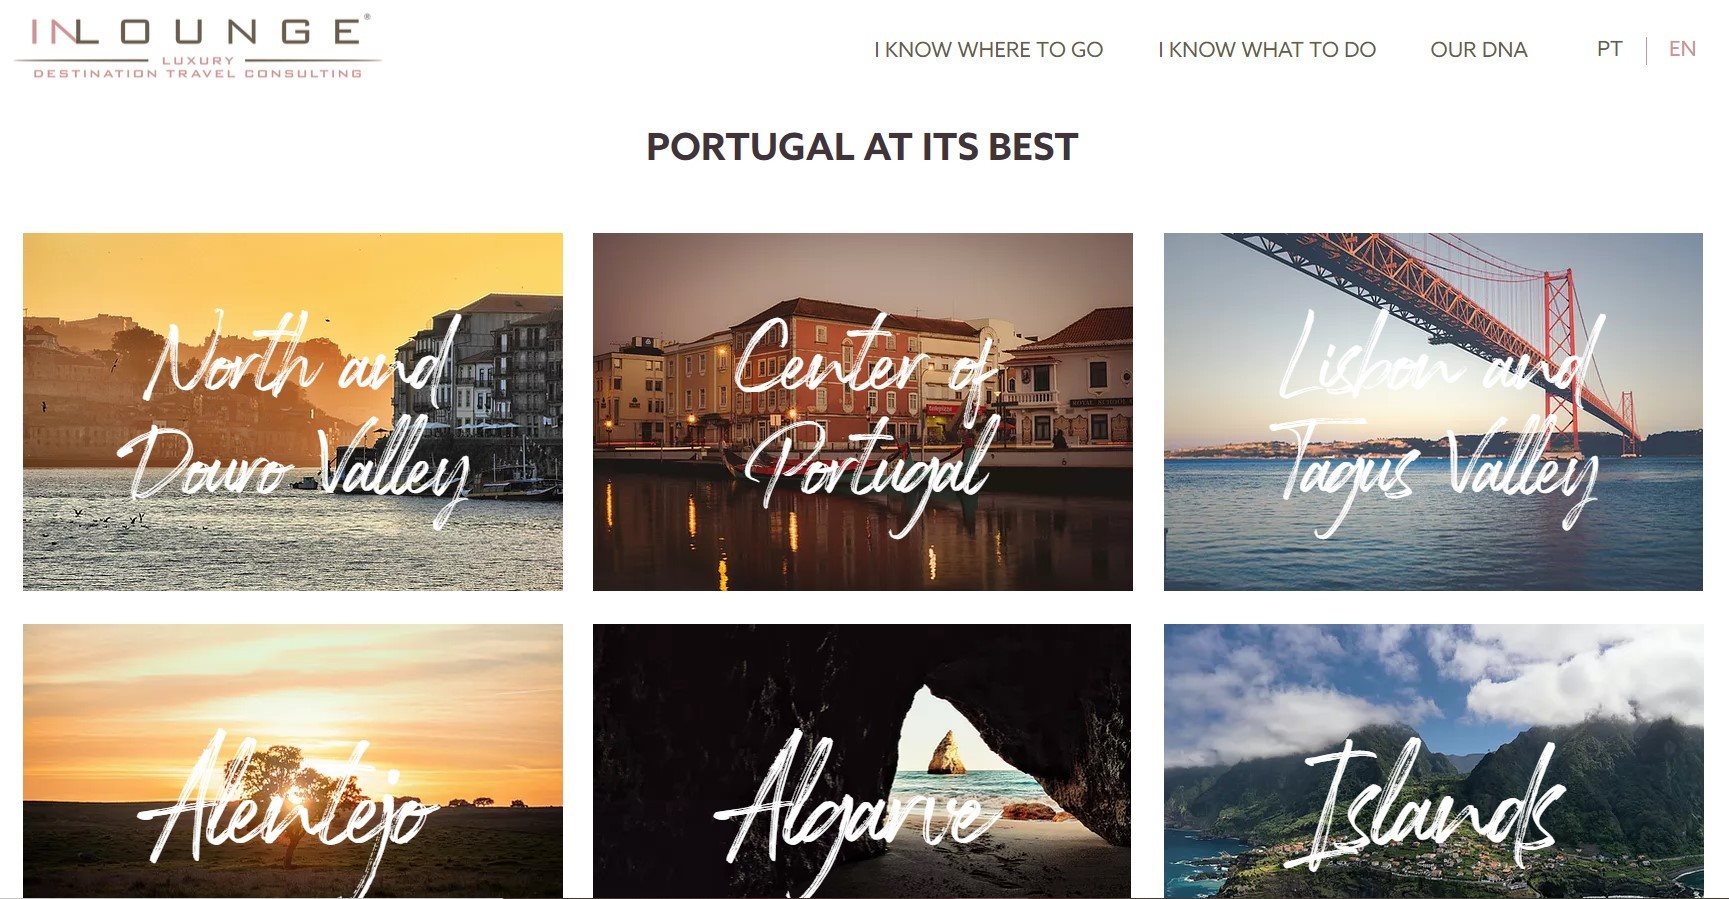 InLounge - Luxury Destination Travel Consulting promove Portugal de luxo aos viajantes